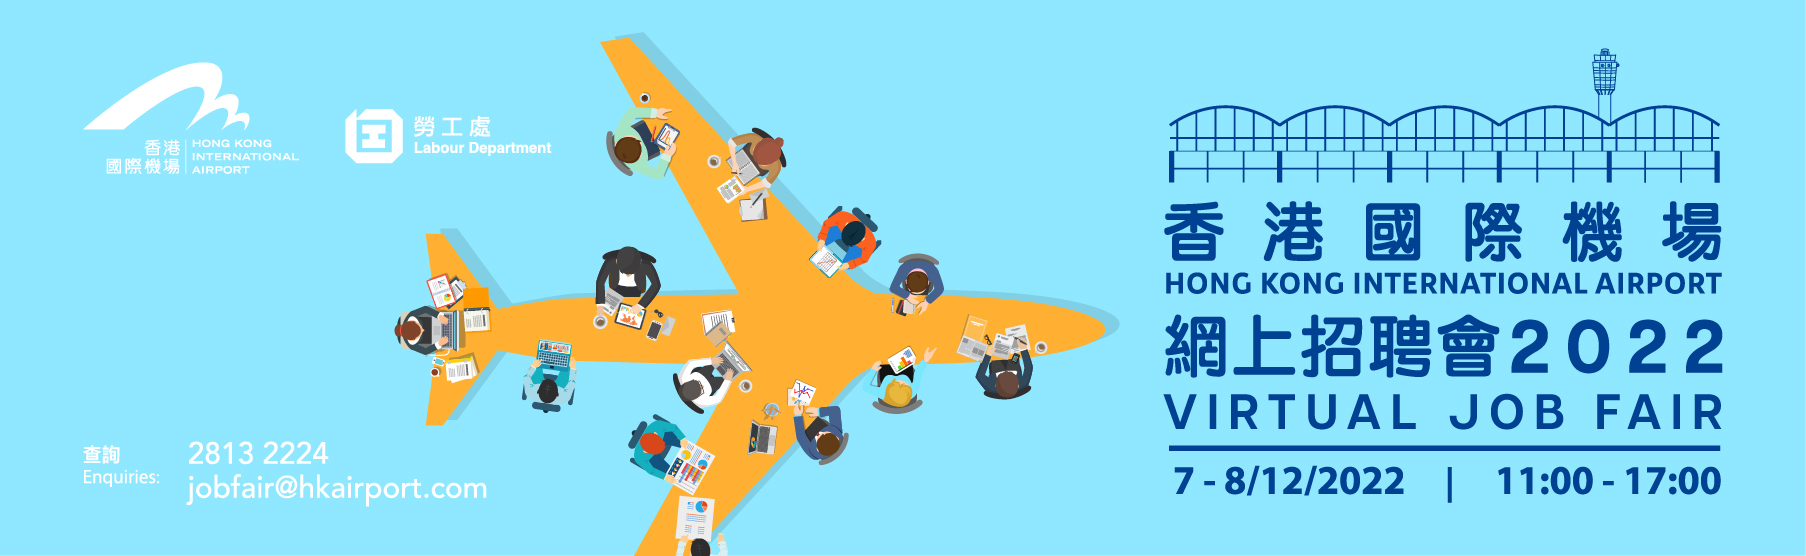 Hong Kong International Airport Virtual Job Fair 2022